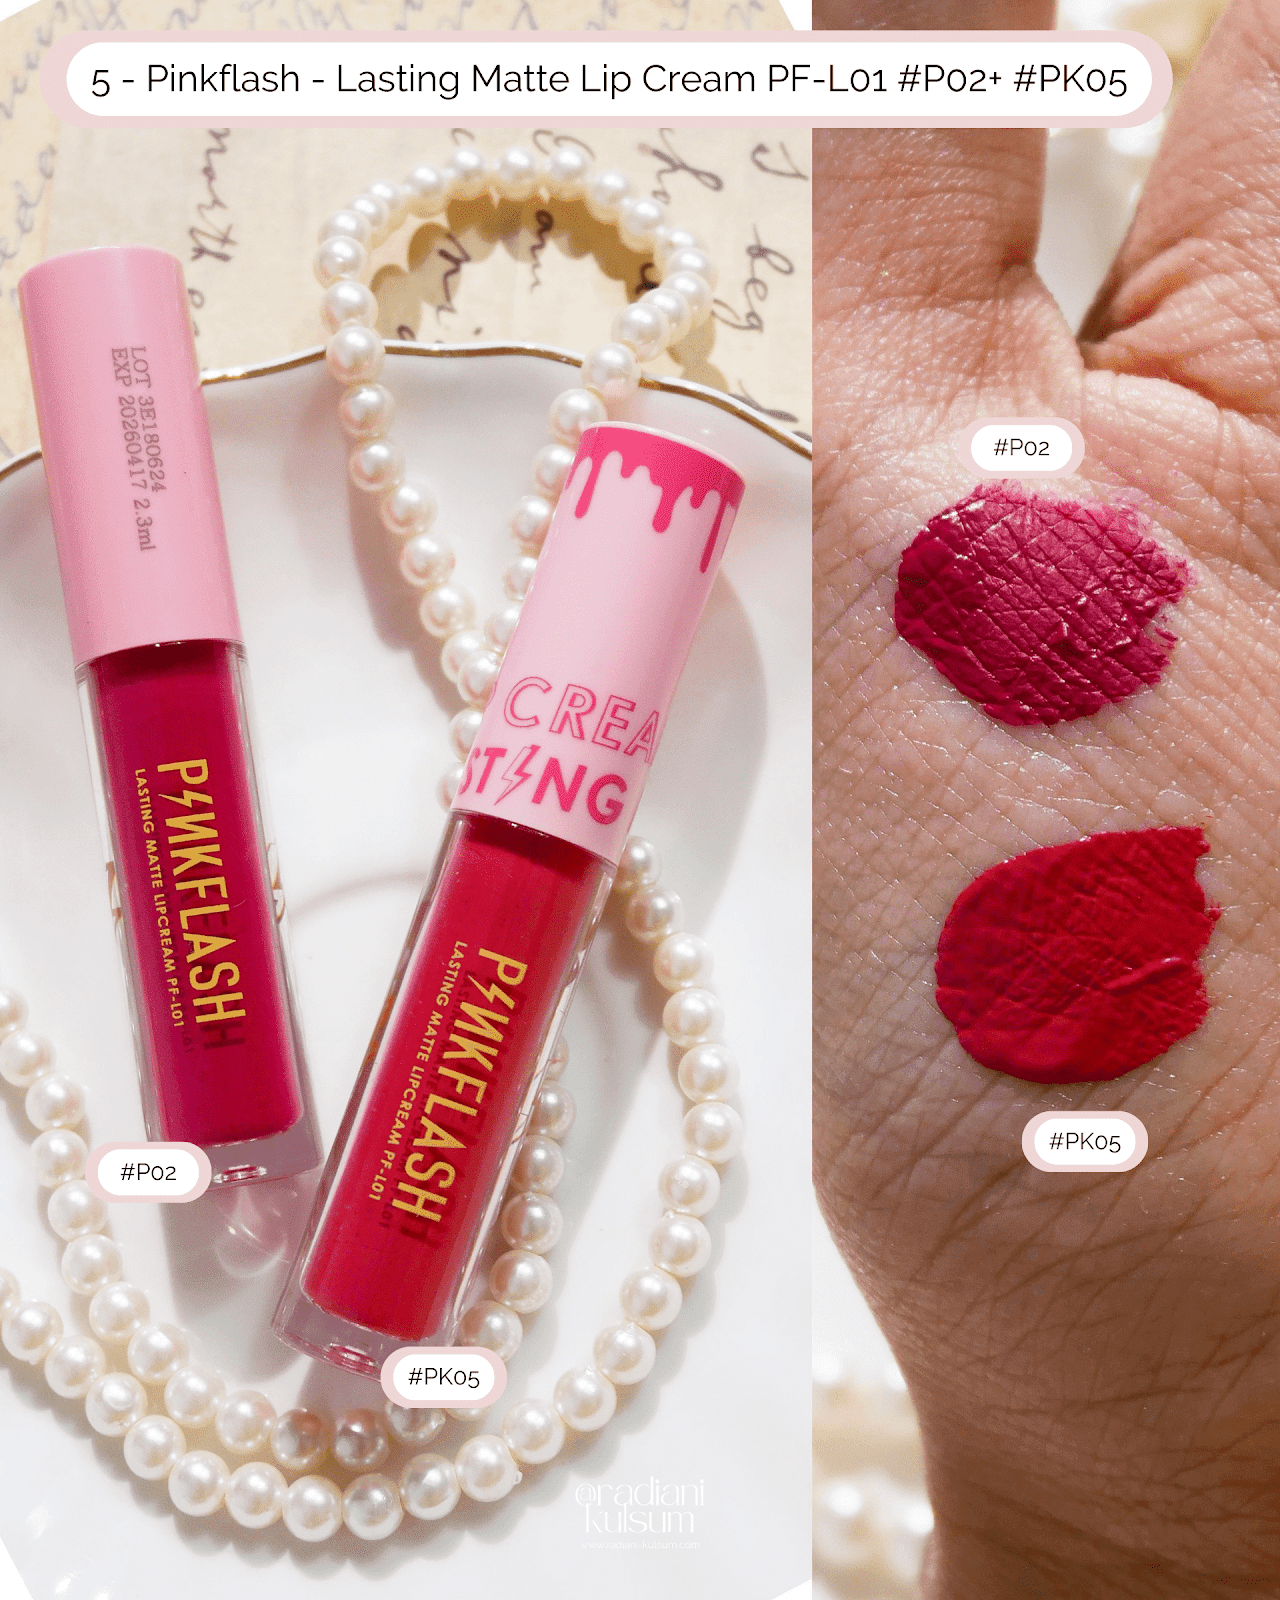 Pinkflash - Lasting Matte Lip Cream PF-L01 #P02 + #PK05